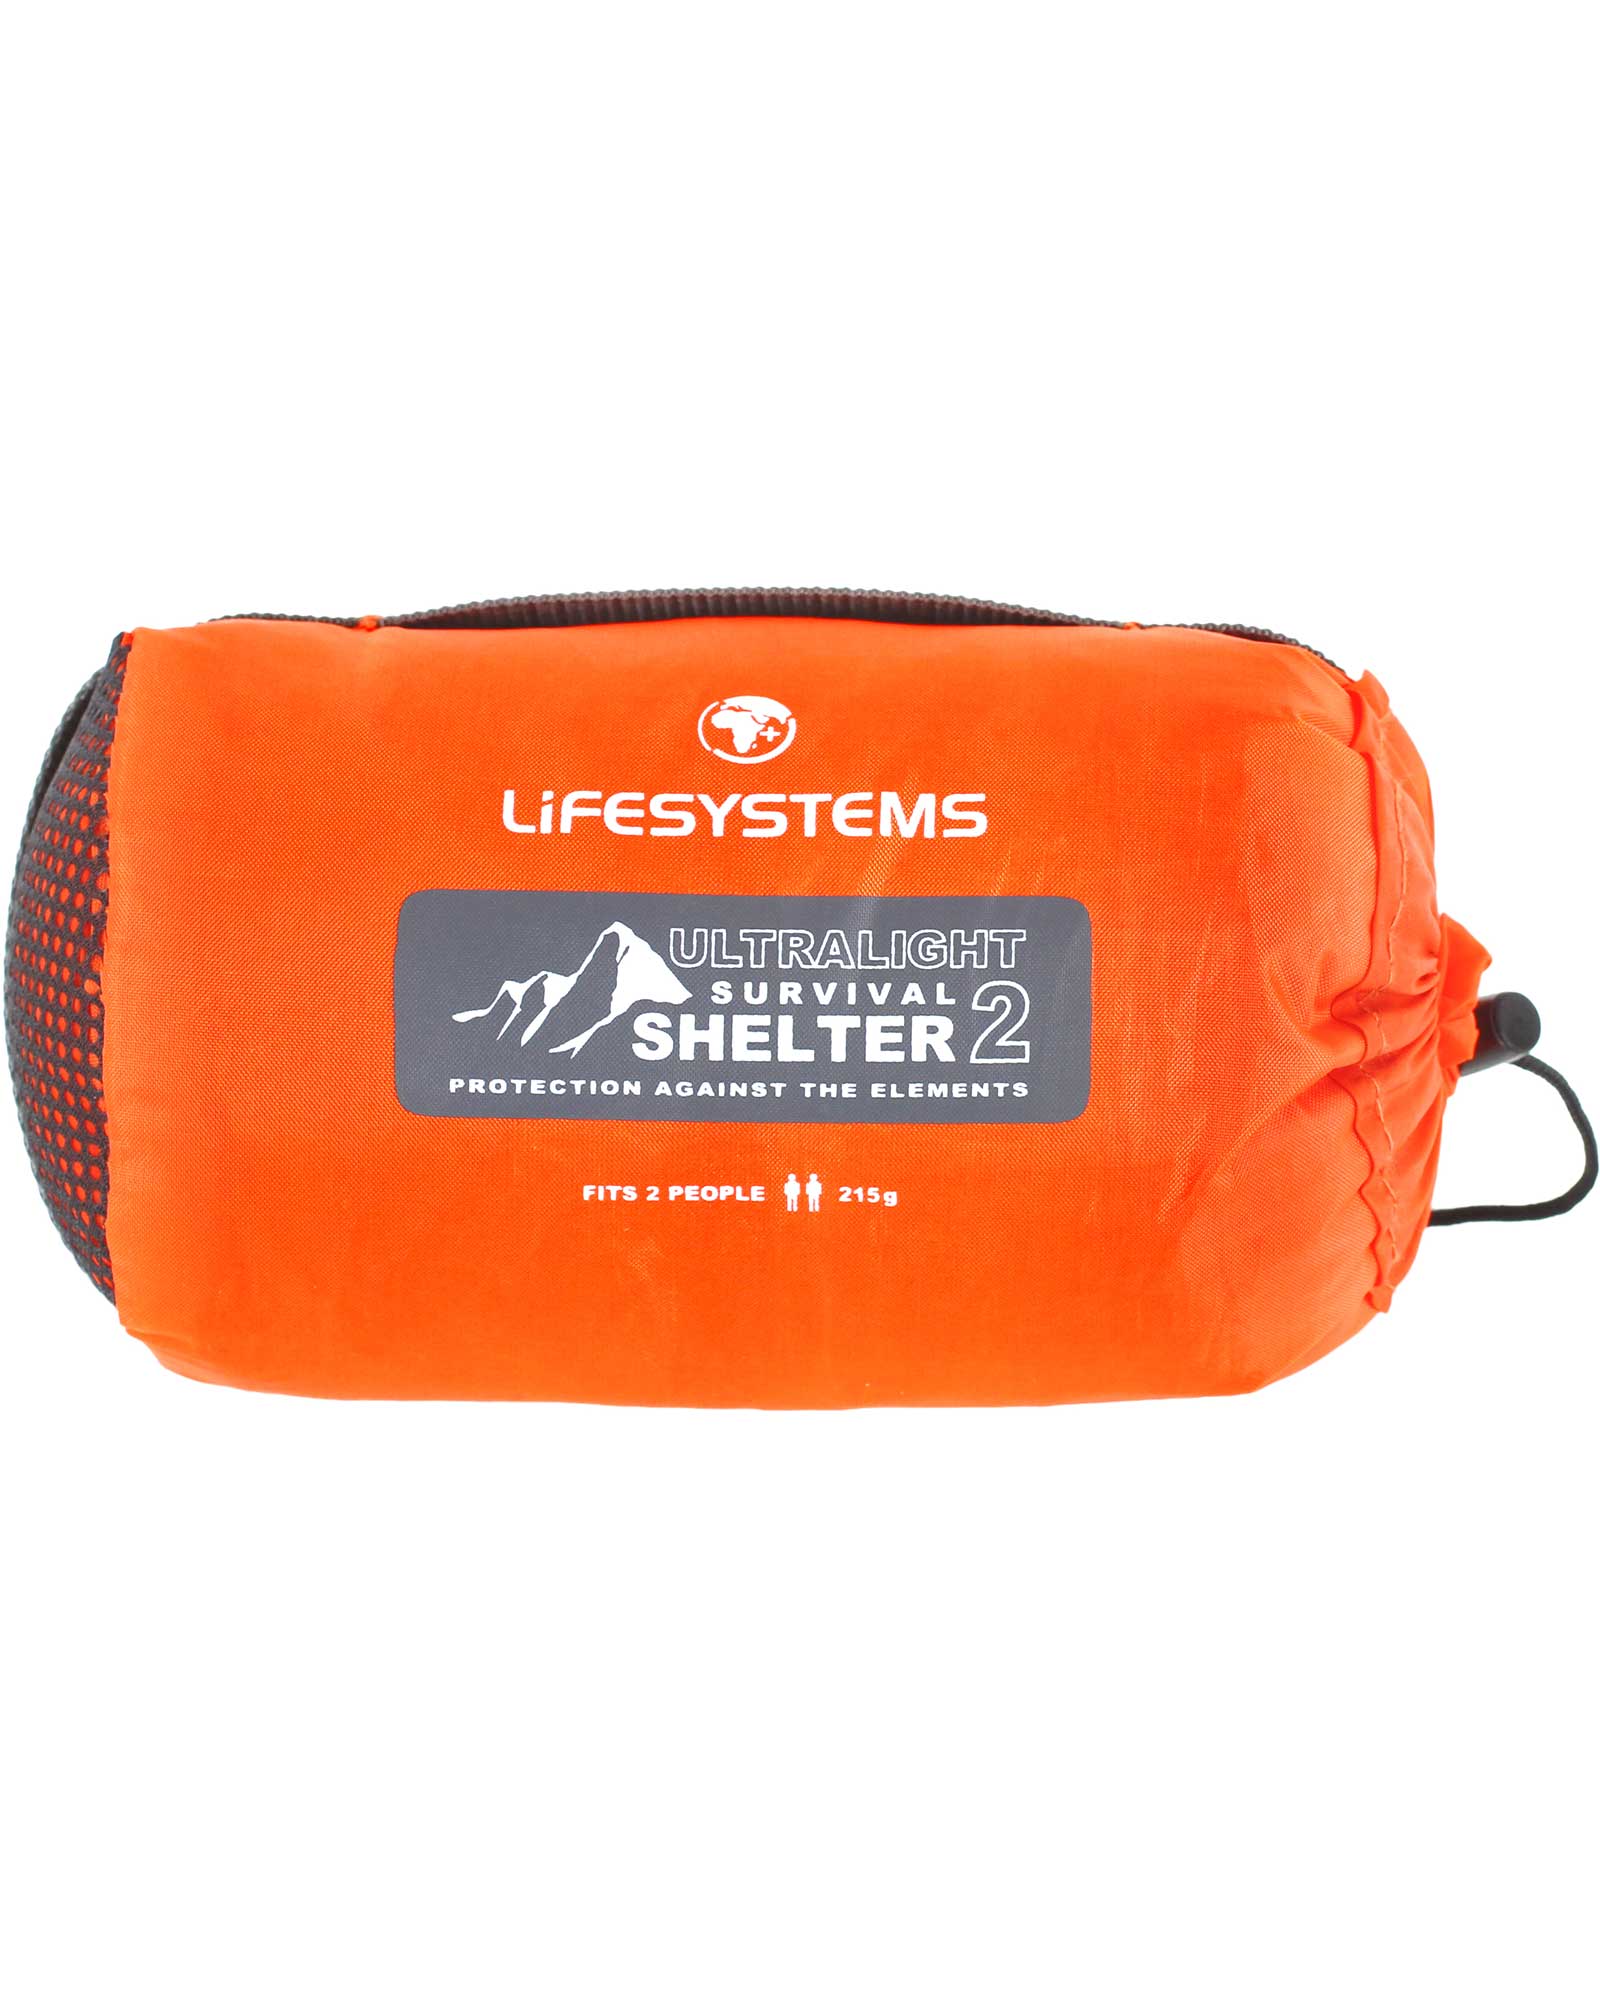 Lifesystems Ultralight Survival Shelter 2 0